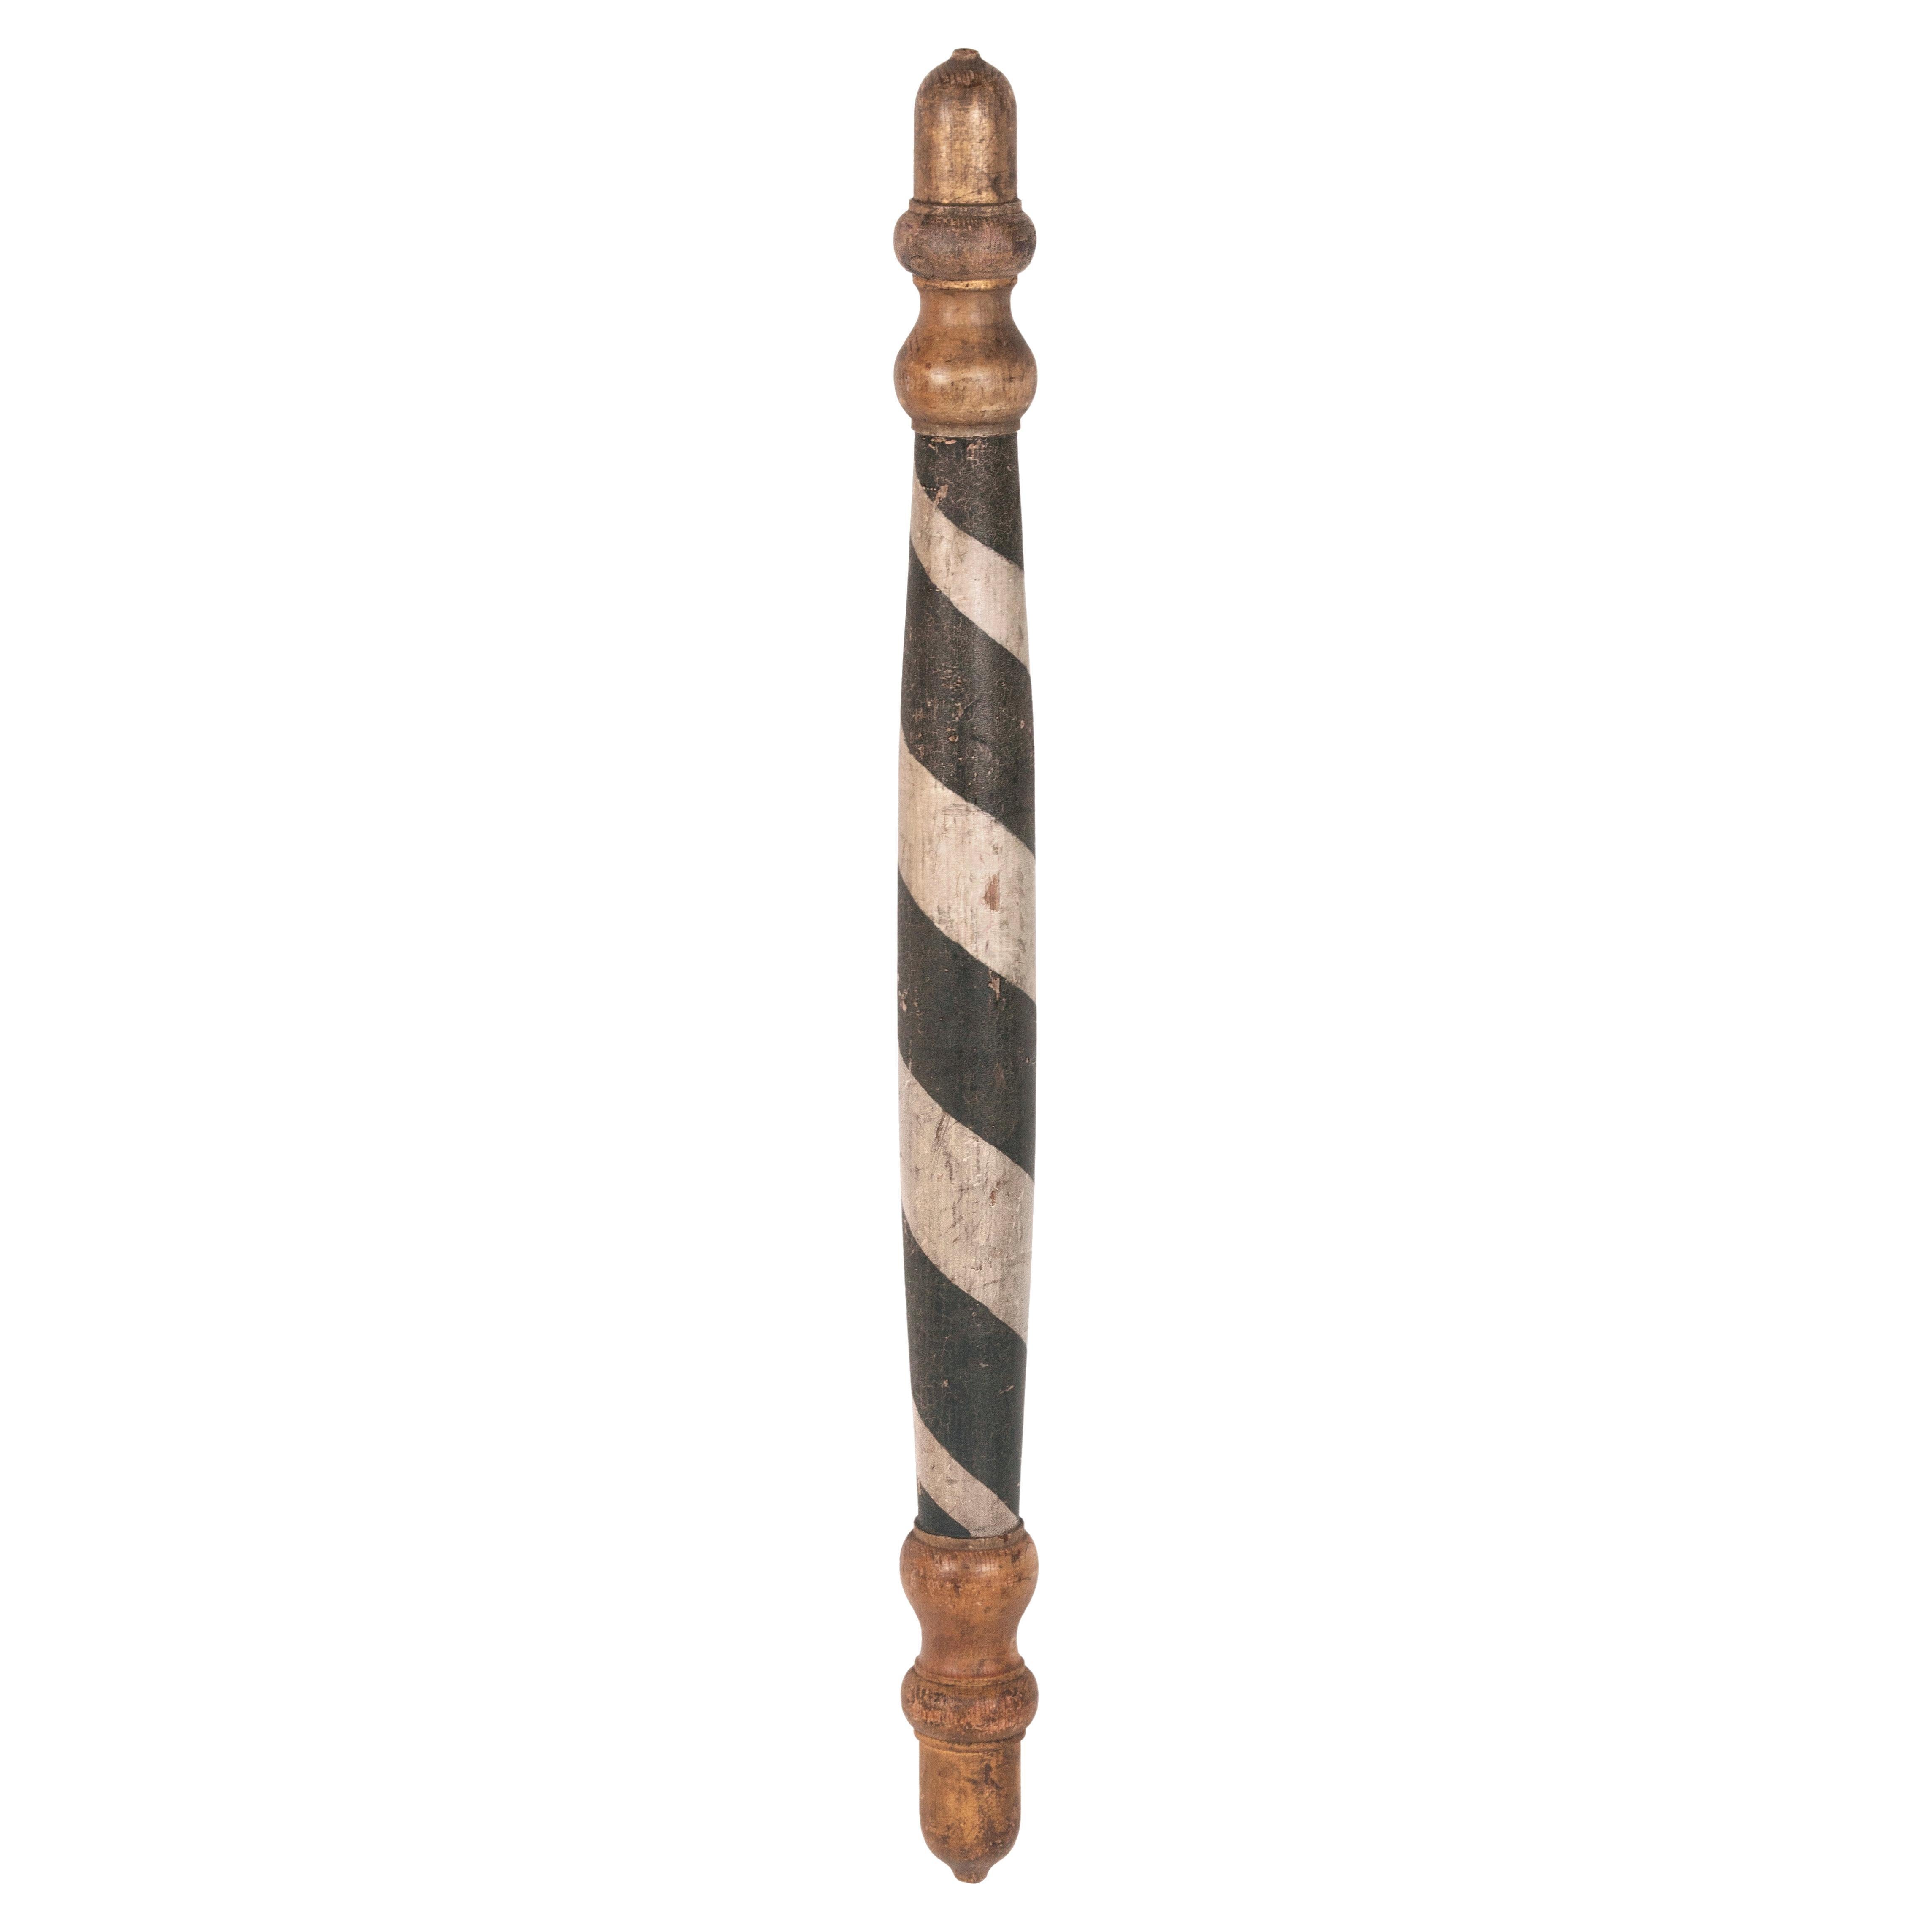 Black & White Barber Pole with Acorn Finials, ca 1840-1860